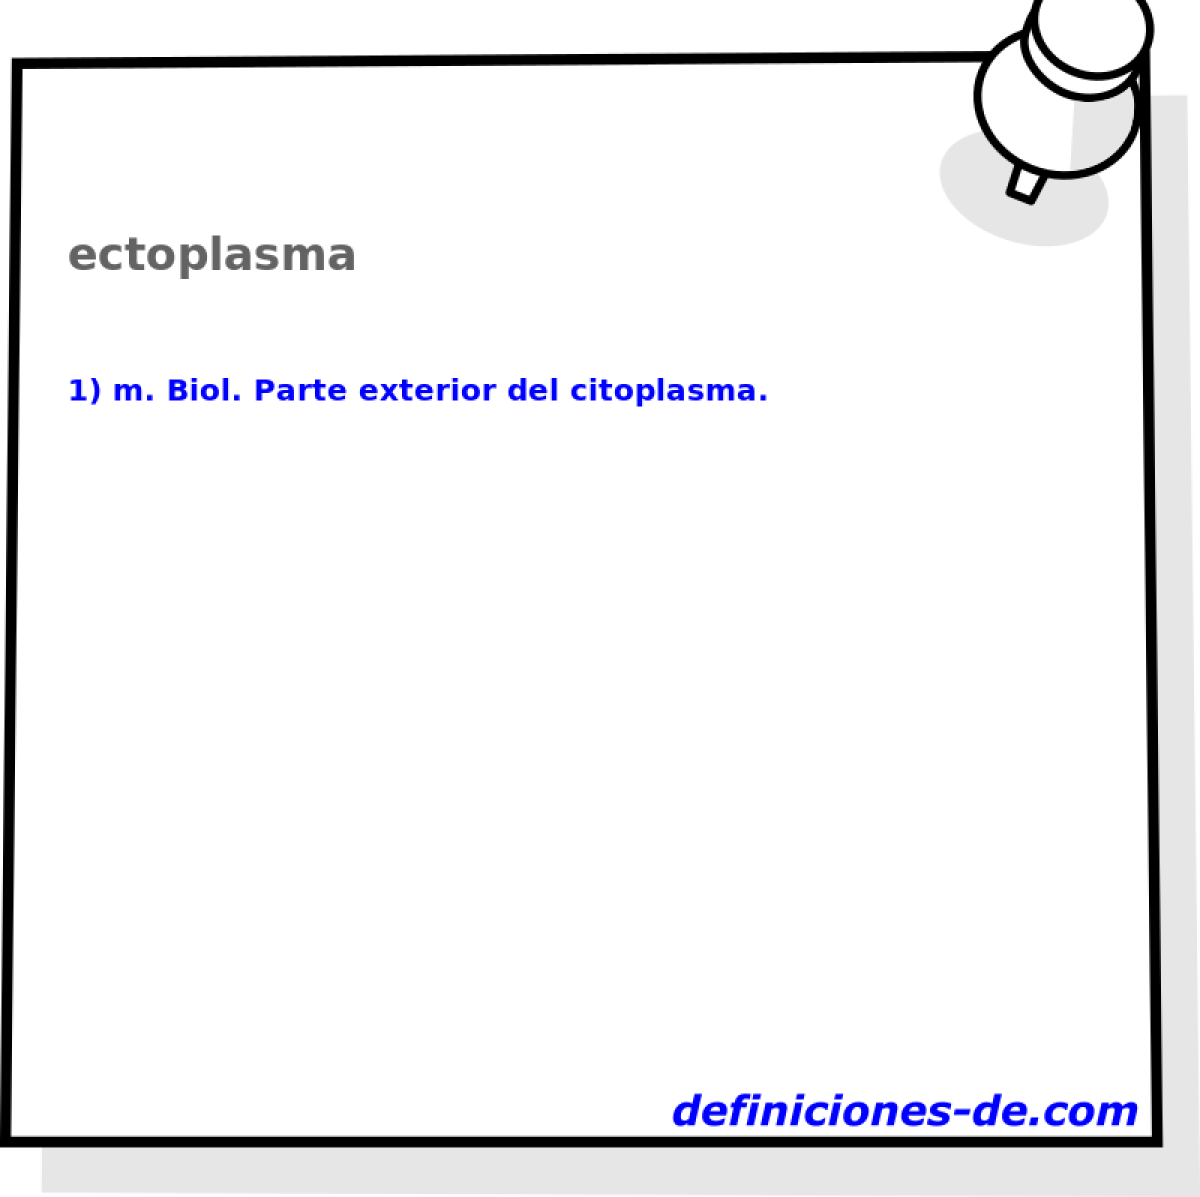 ectoplasma 